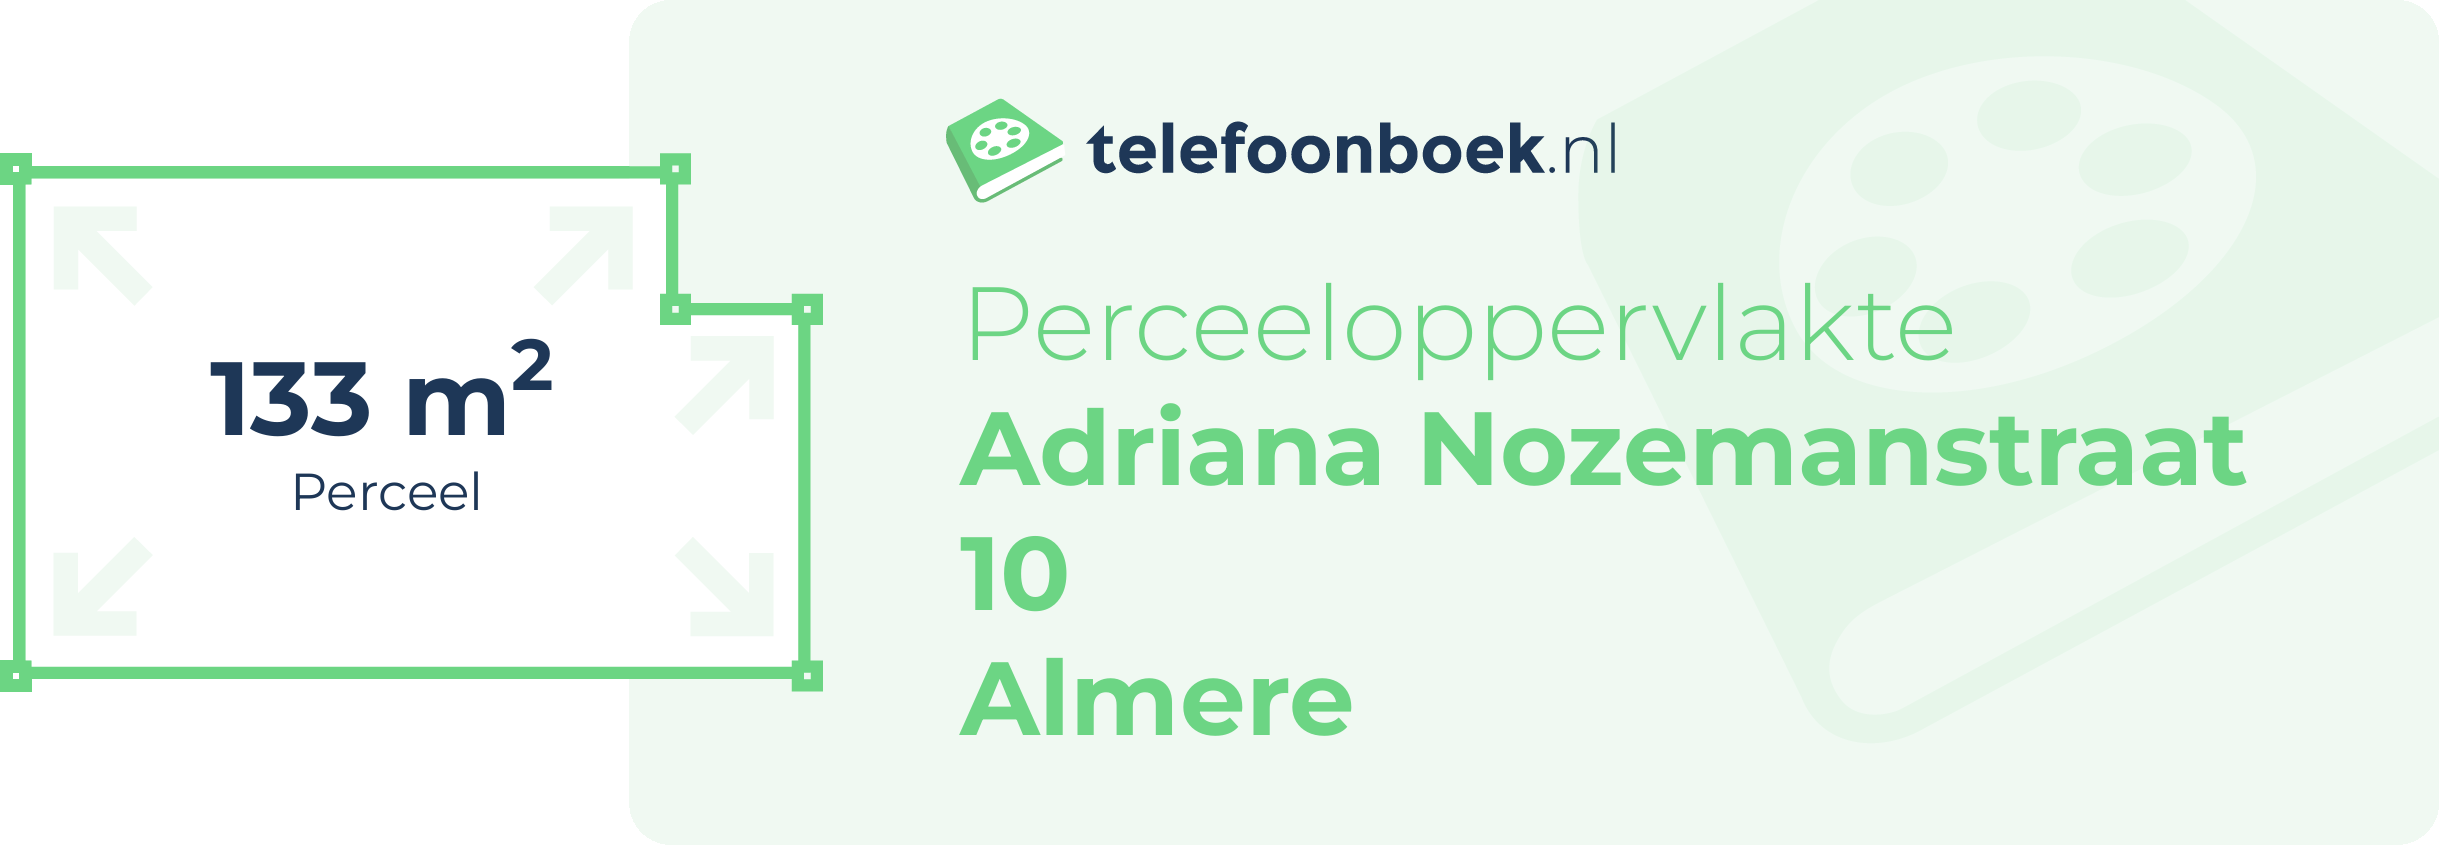 Perceeloppervlakte Adriana Nozemanstraat 10 Almere